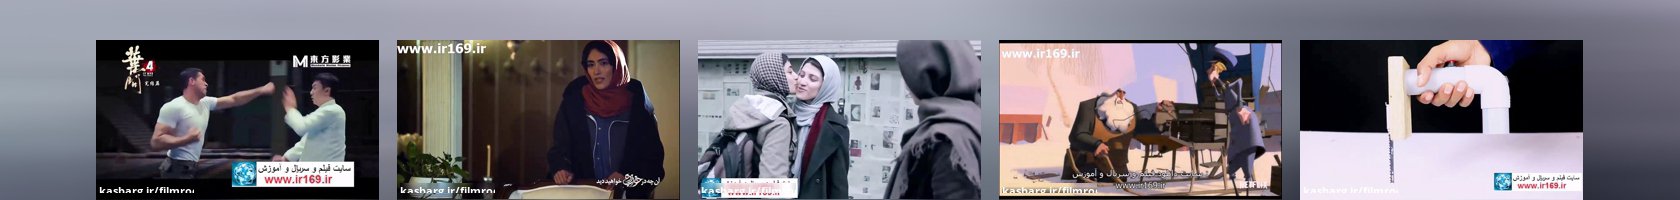  دانلود فيلم و سريال ايراني